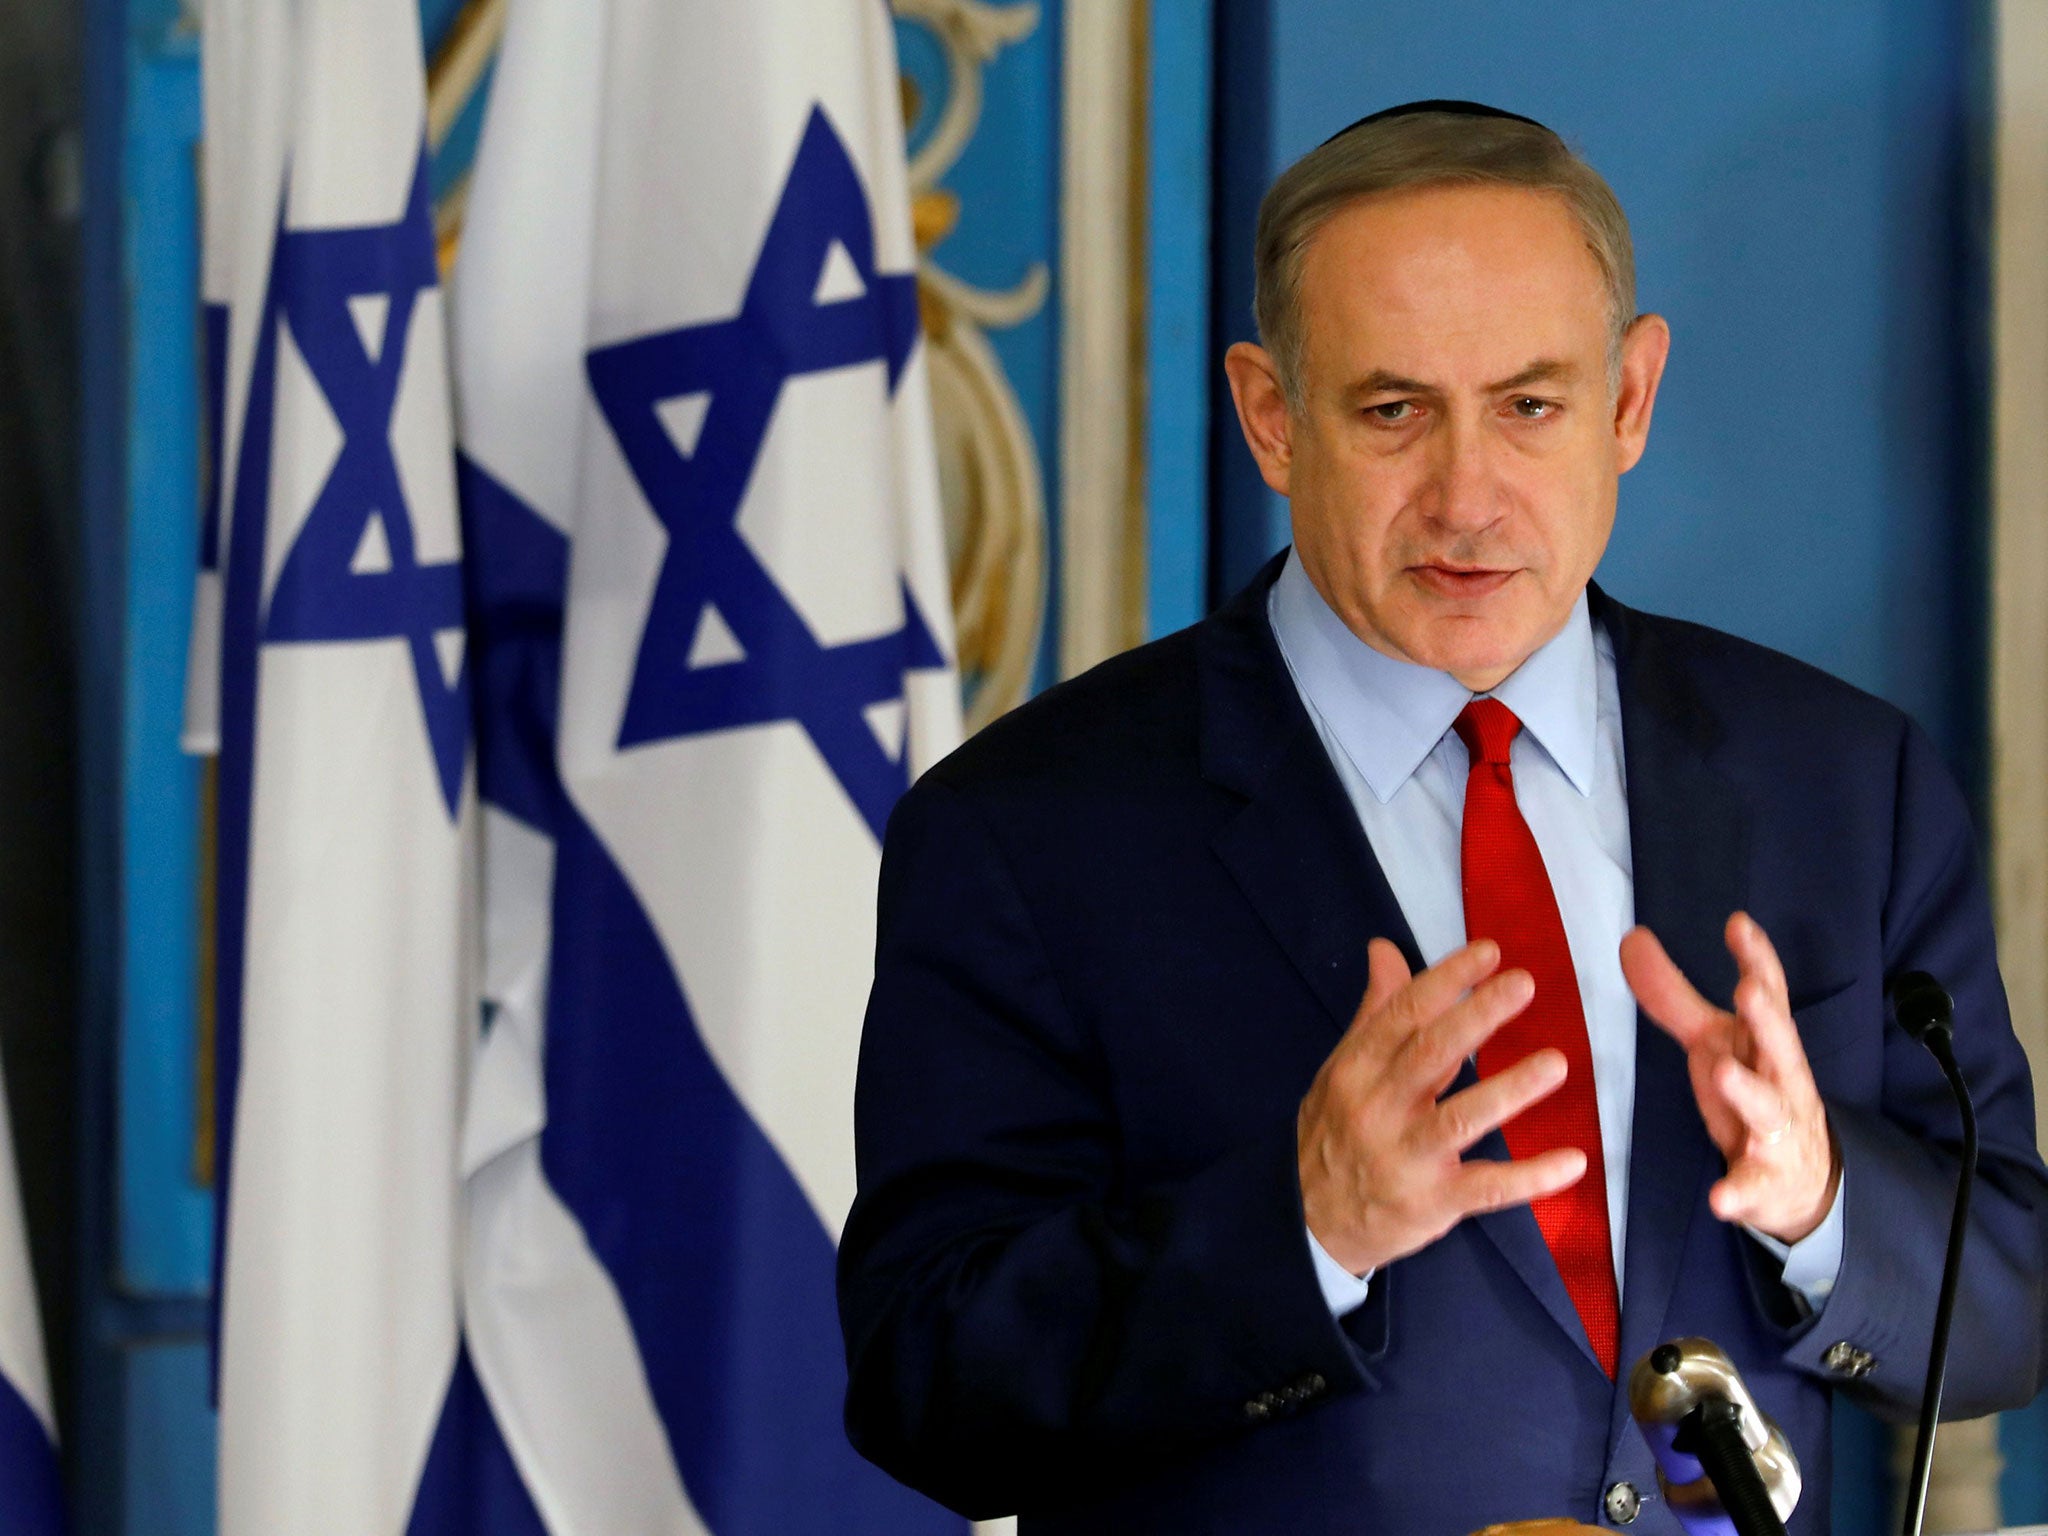 Israeli Prime Minister Benjamin Netanyahu speaks during an event marking International Holocaust Remembrance Day at the Yad Vashem synagogue in Jerusalem